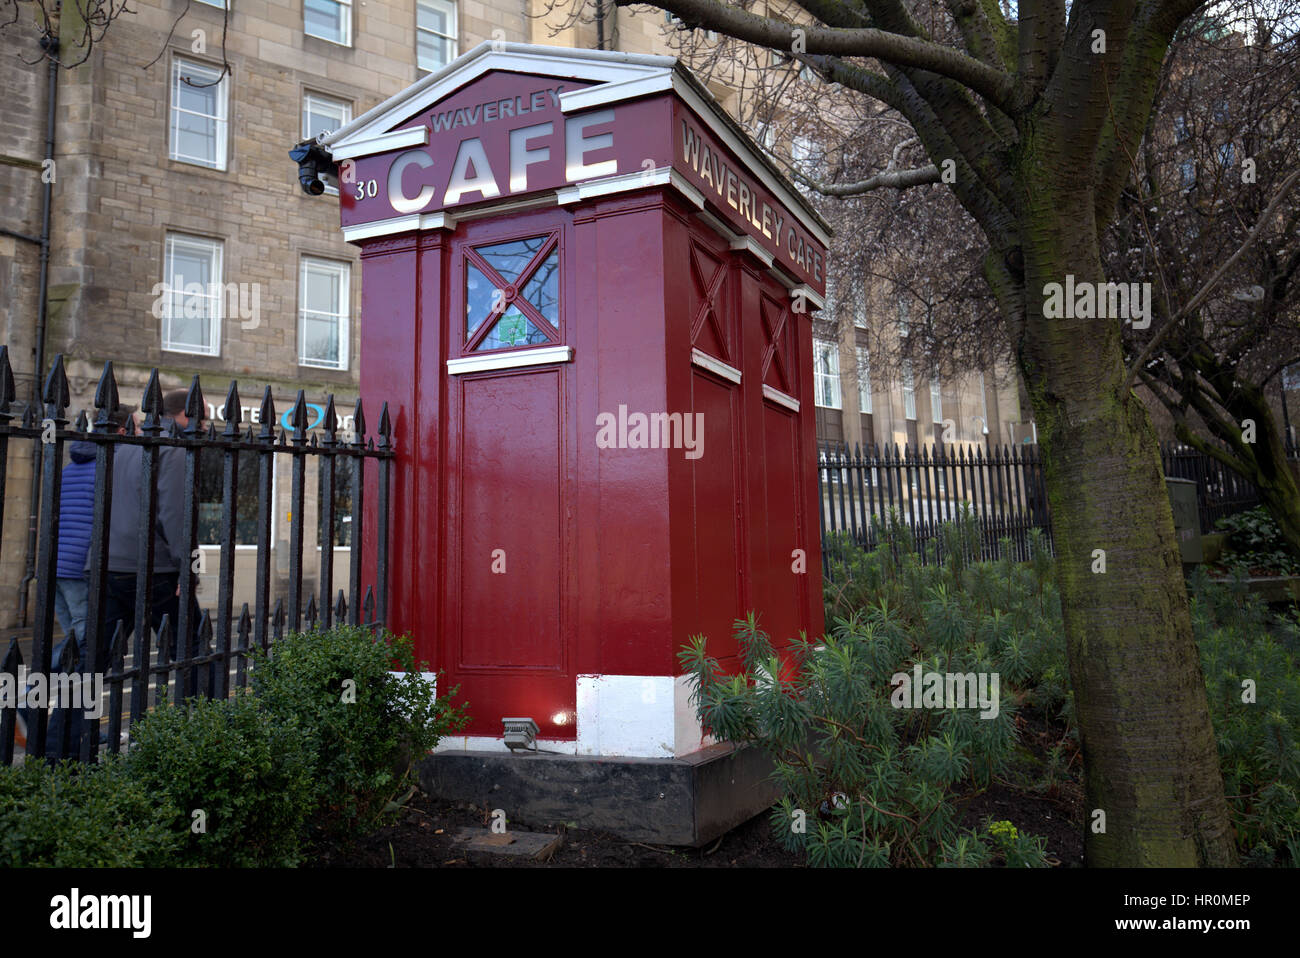 Edinburgh die Hügel Touristen Waverley Café Café alte Tardis geben Polizei box Stockfoto